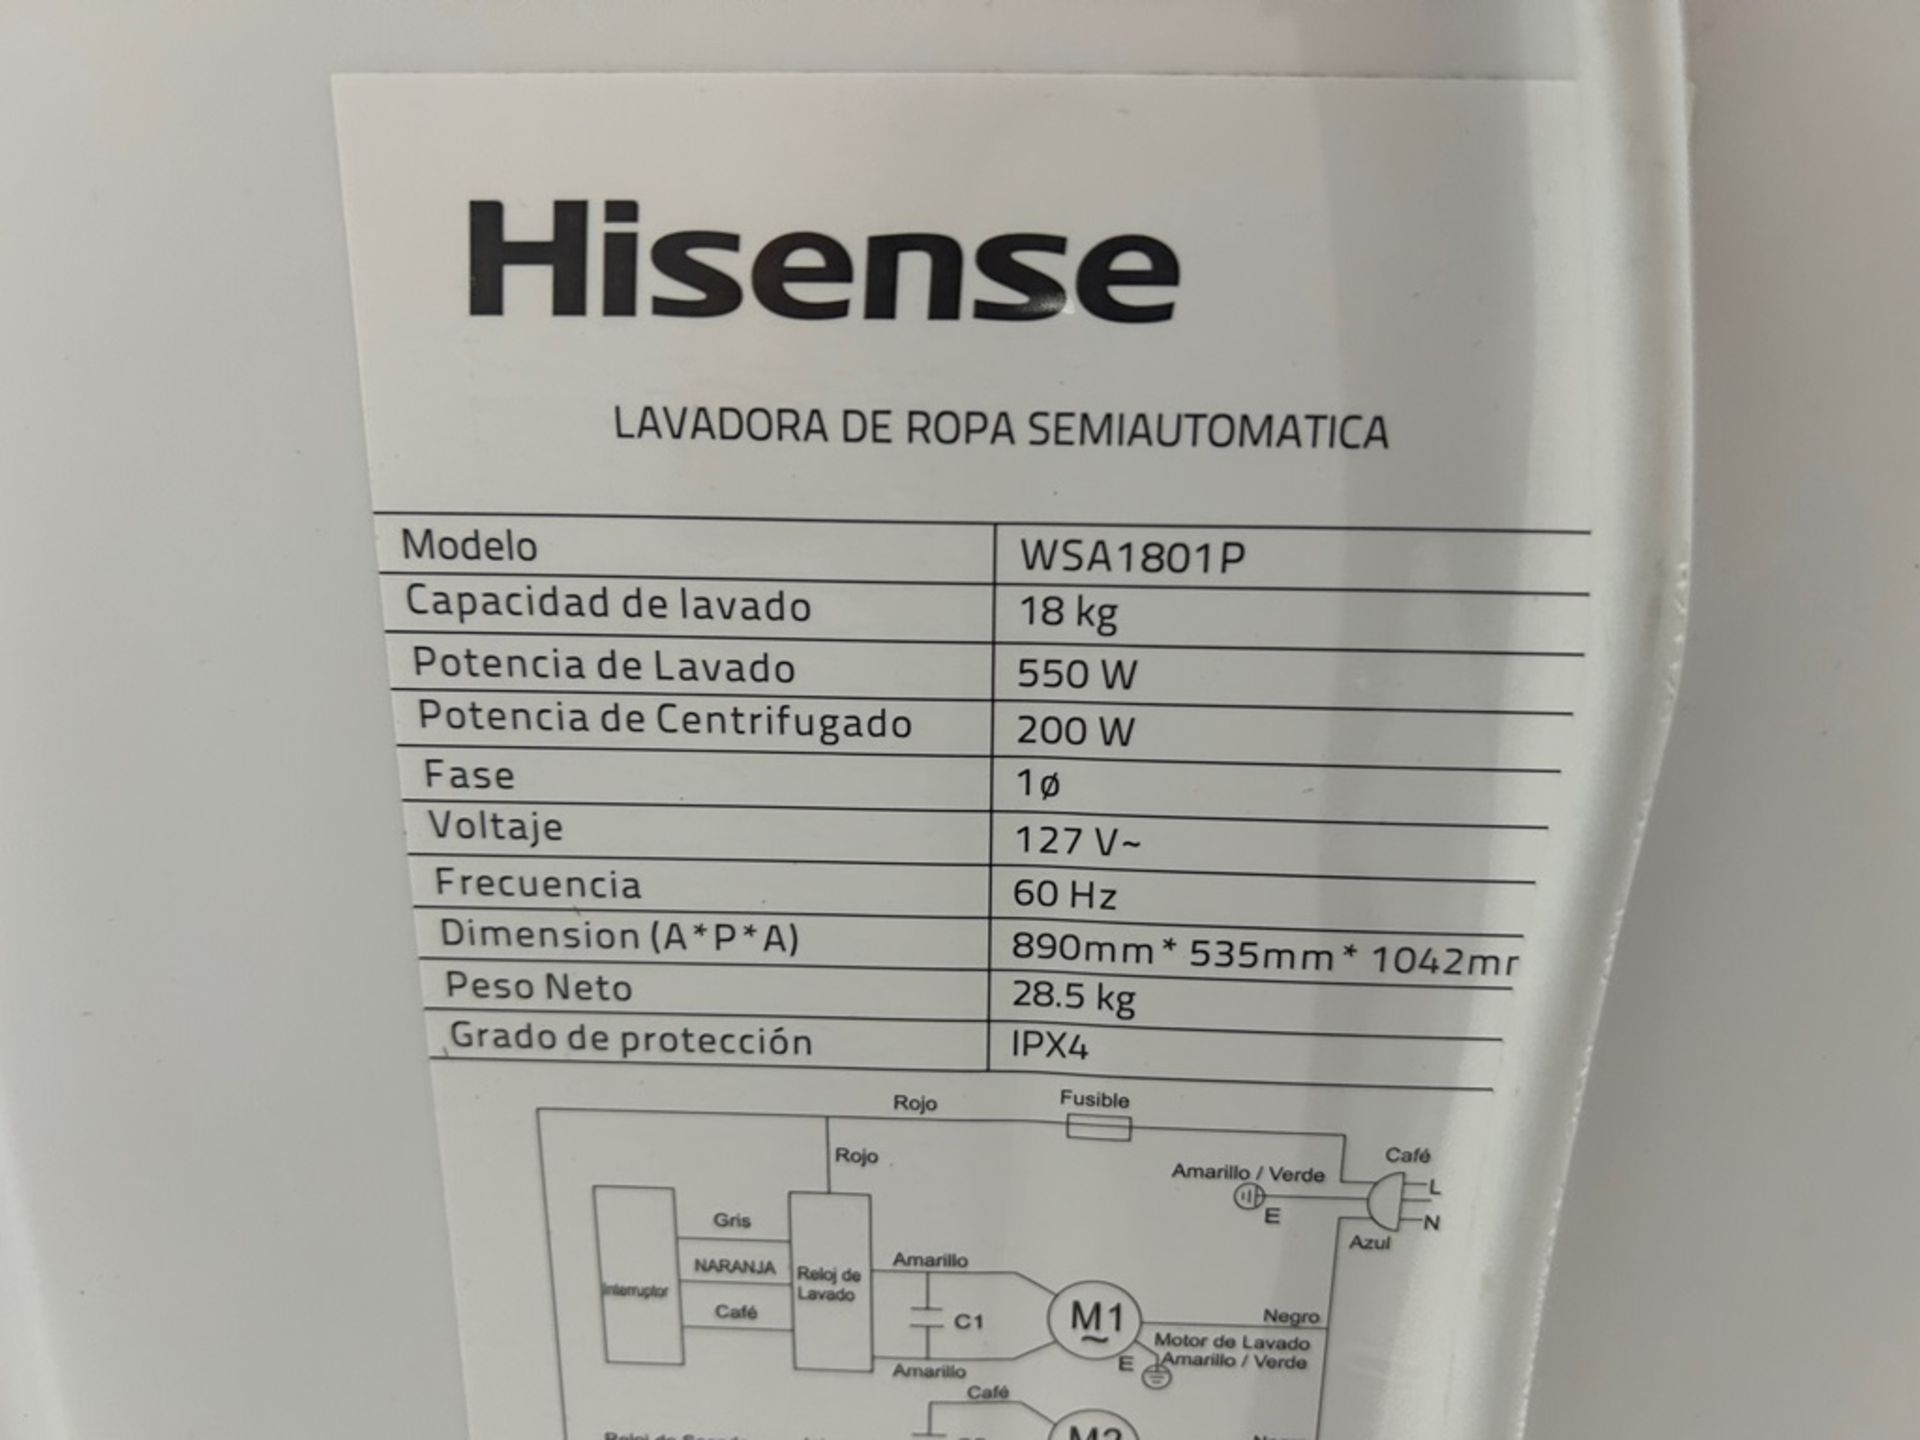 Lote de 2 lavadoras contiene: 1 Lavadora de 18KG Marca HISENSE, Modelo WSA1801P, Serie 220073, Colo - Image 8 of 12